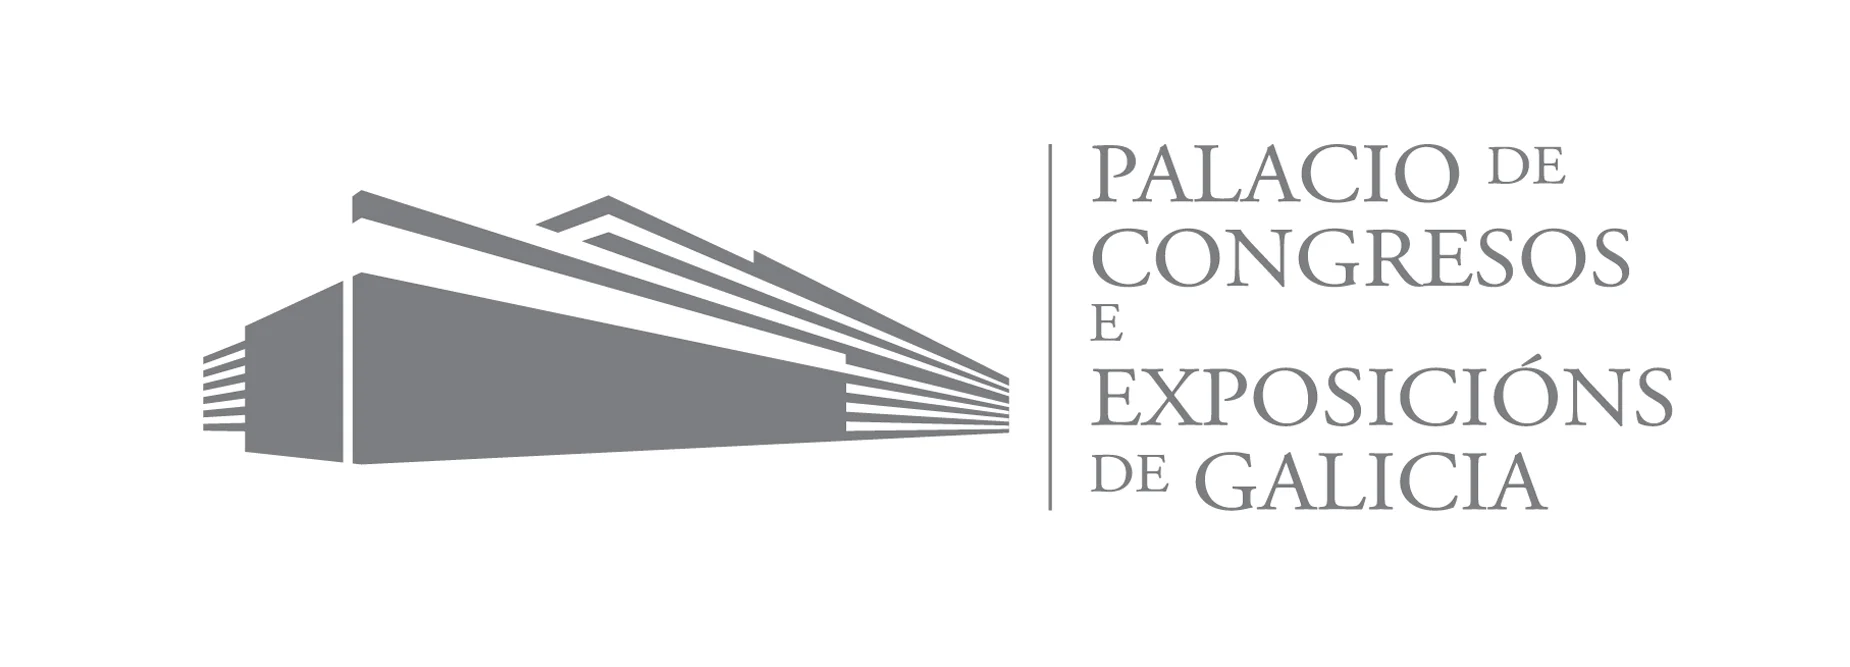 palacio de congresos galicia lp